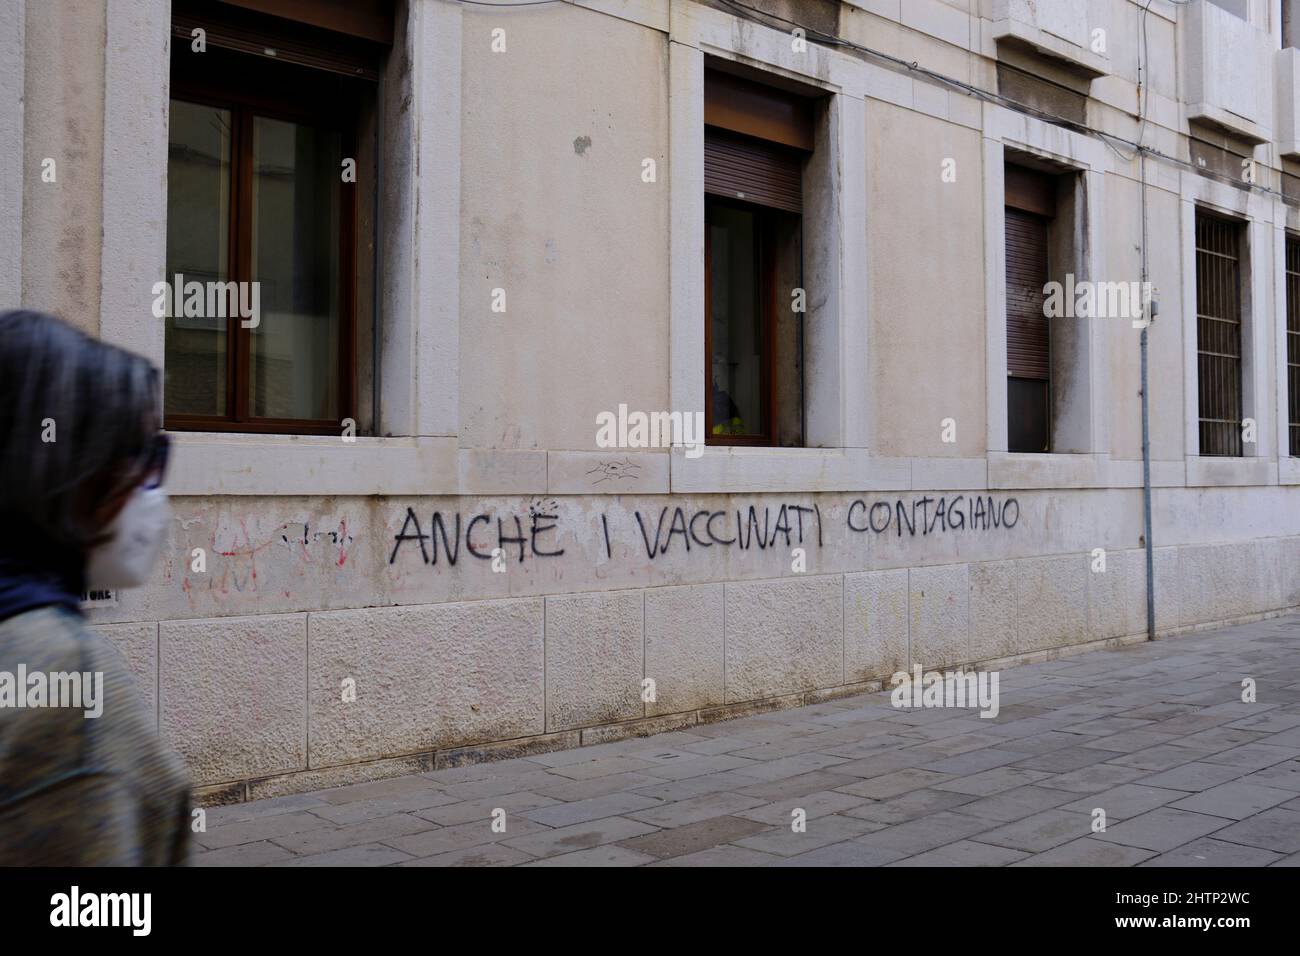 woman wearing mask walks past anti covid graffiti in Venice (even the vaccinated are contagious) Stock Photo